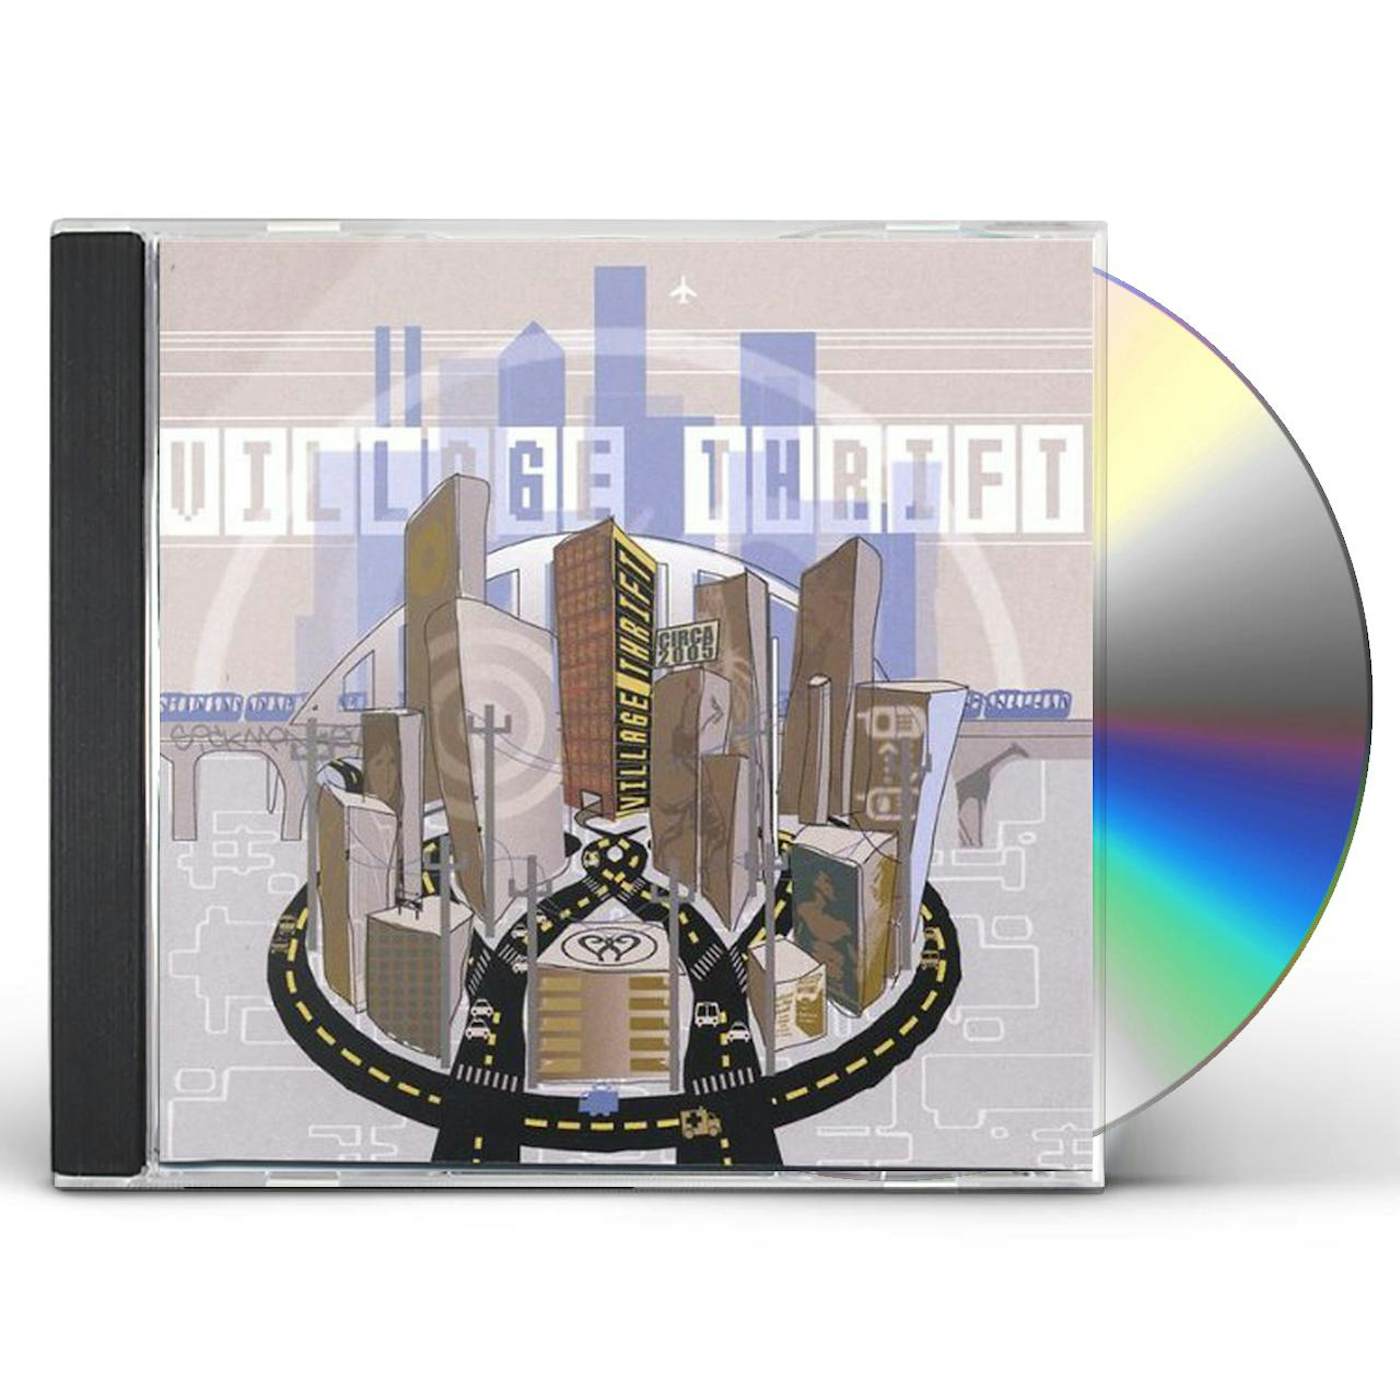 Enter The Worship Circle VILLAGE THRIFT: CIRCA 2005 CD